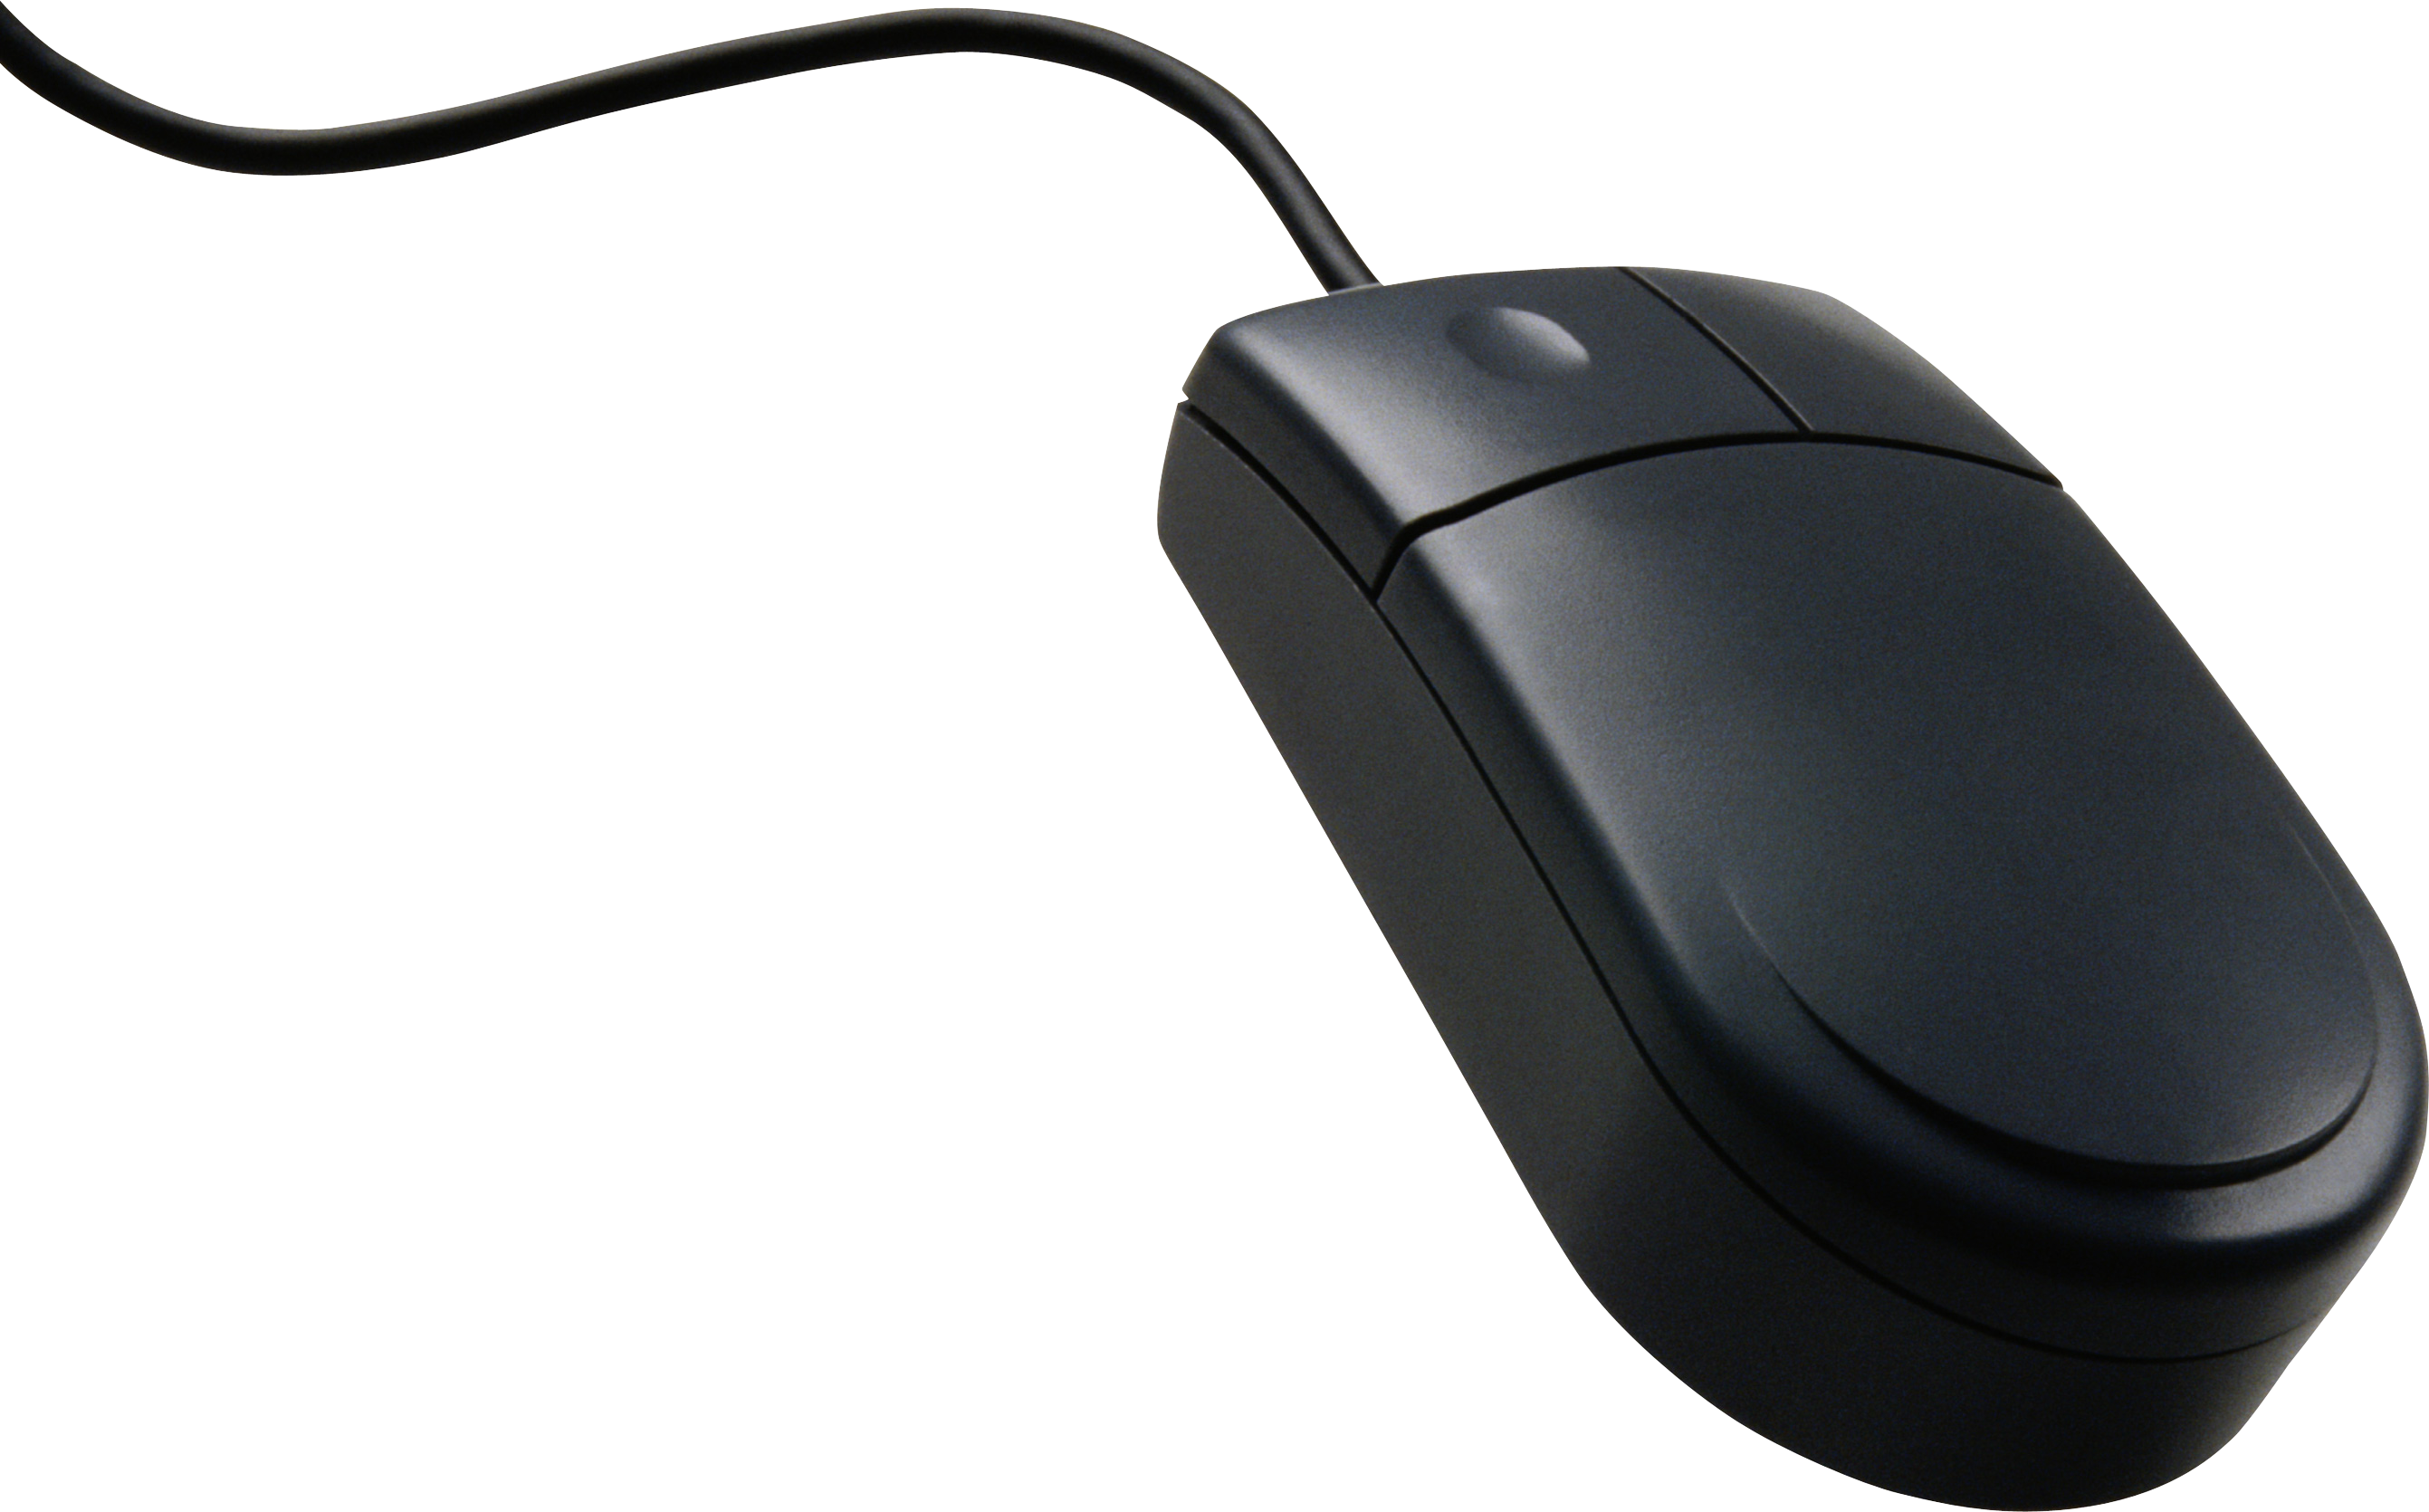 Black Pc Mouse Png Image - Pc Mouse, Transparent background PNG HD thumbnail